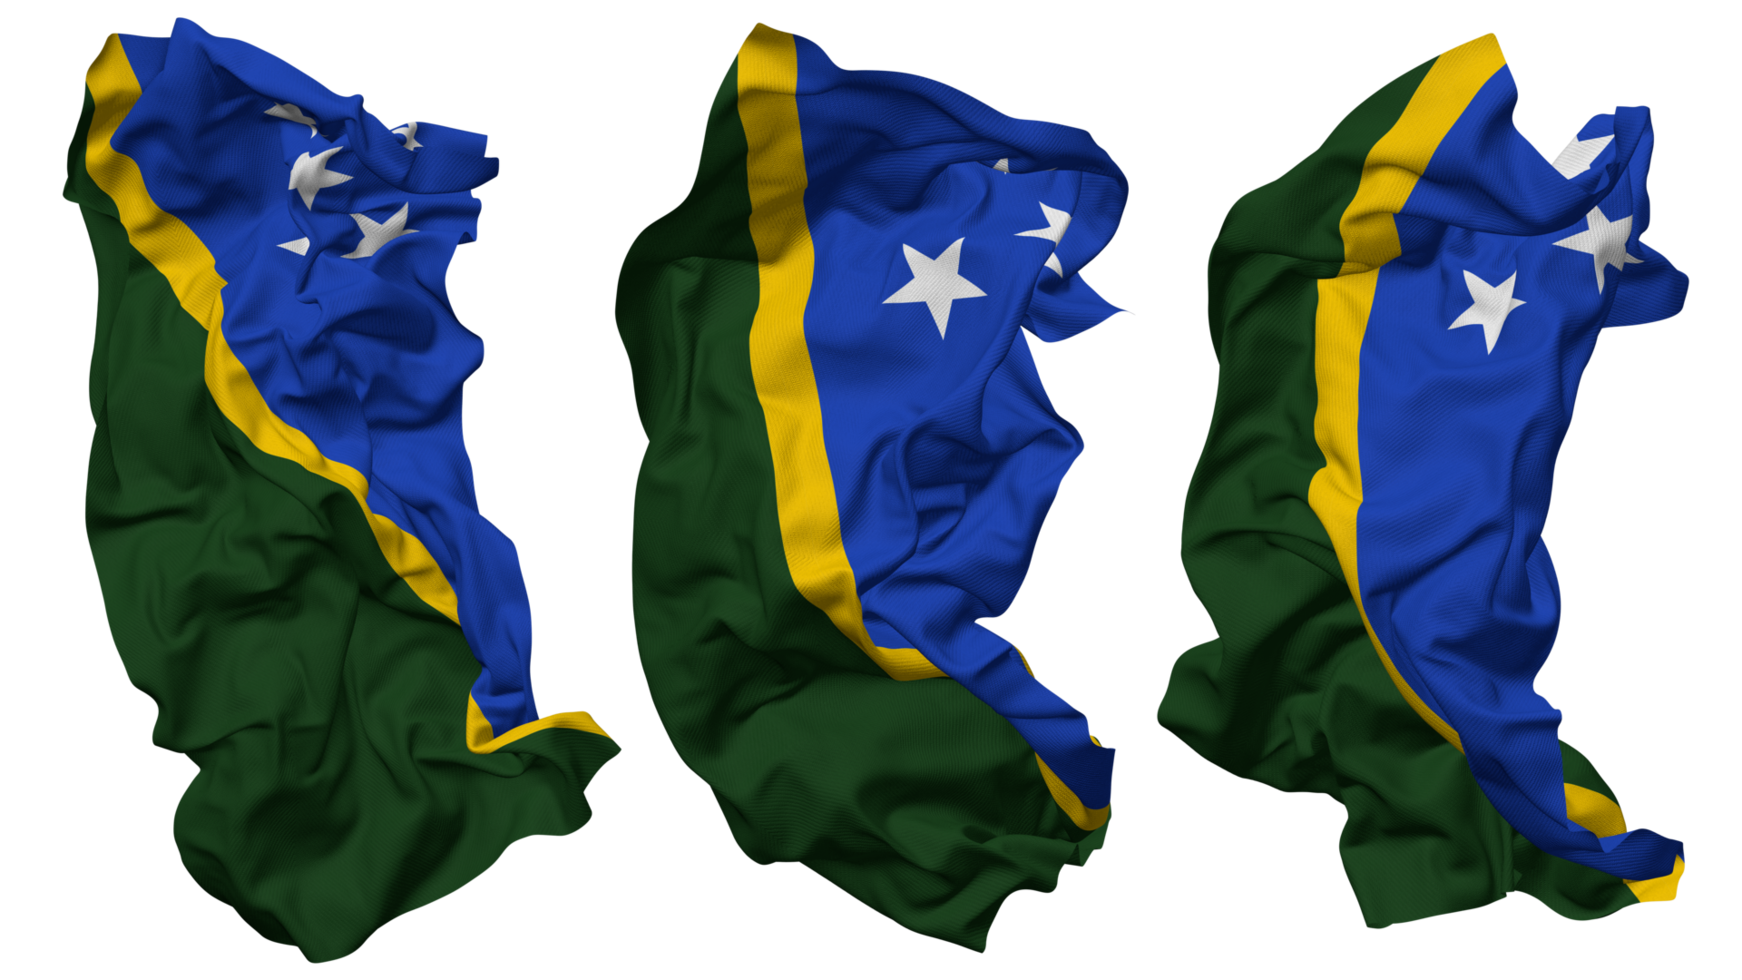 Salomón islas bandera olas aislado en diferente estilos con bache textura, 3d representación png